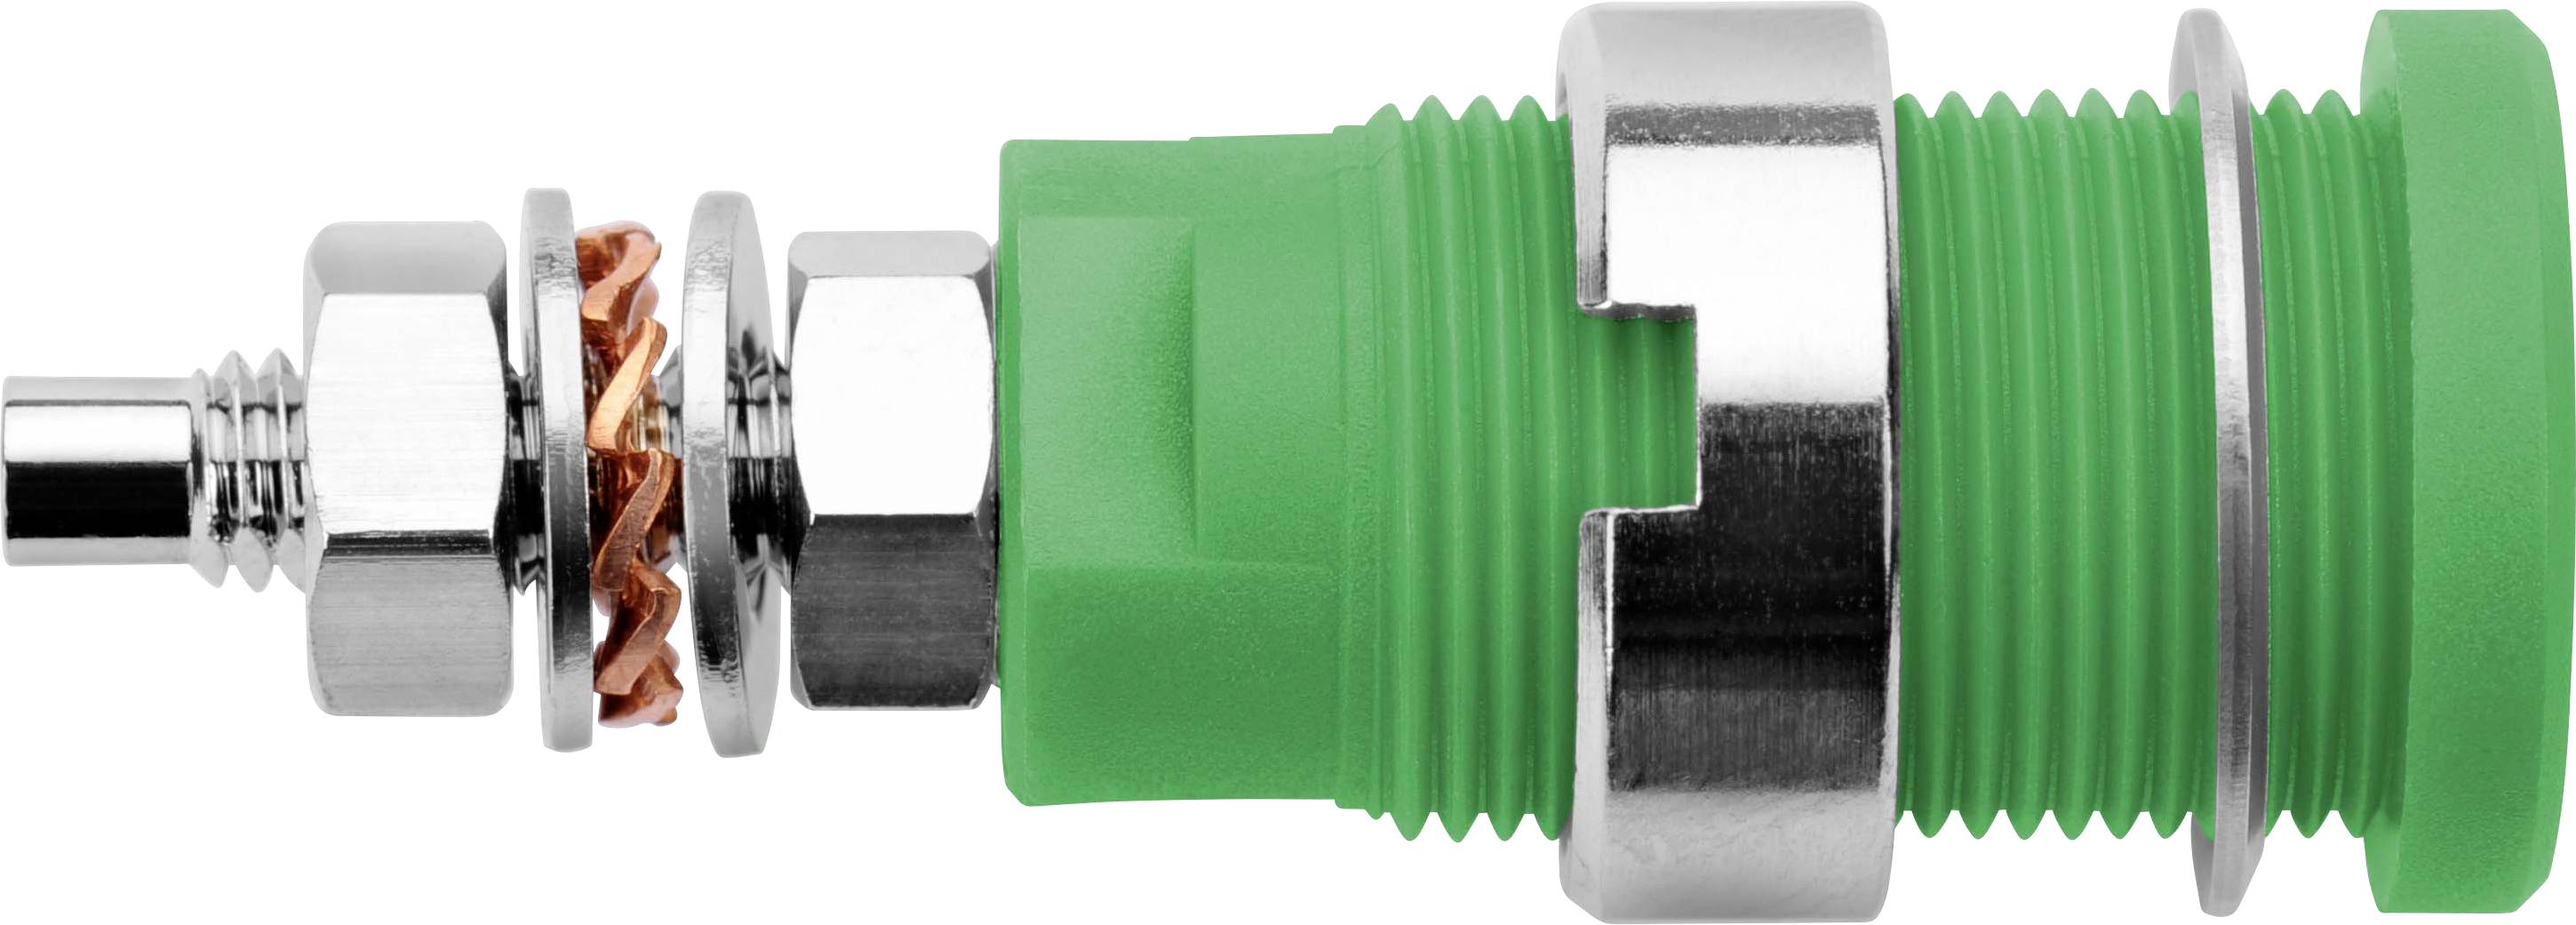 Schützinger seb6448 Green Safety Socket 4mm Pin Ø 1,9mm 854598 